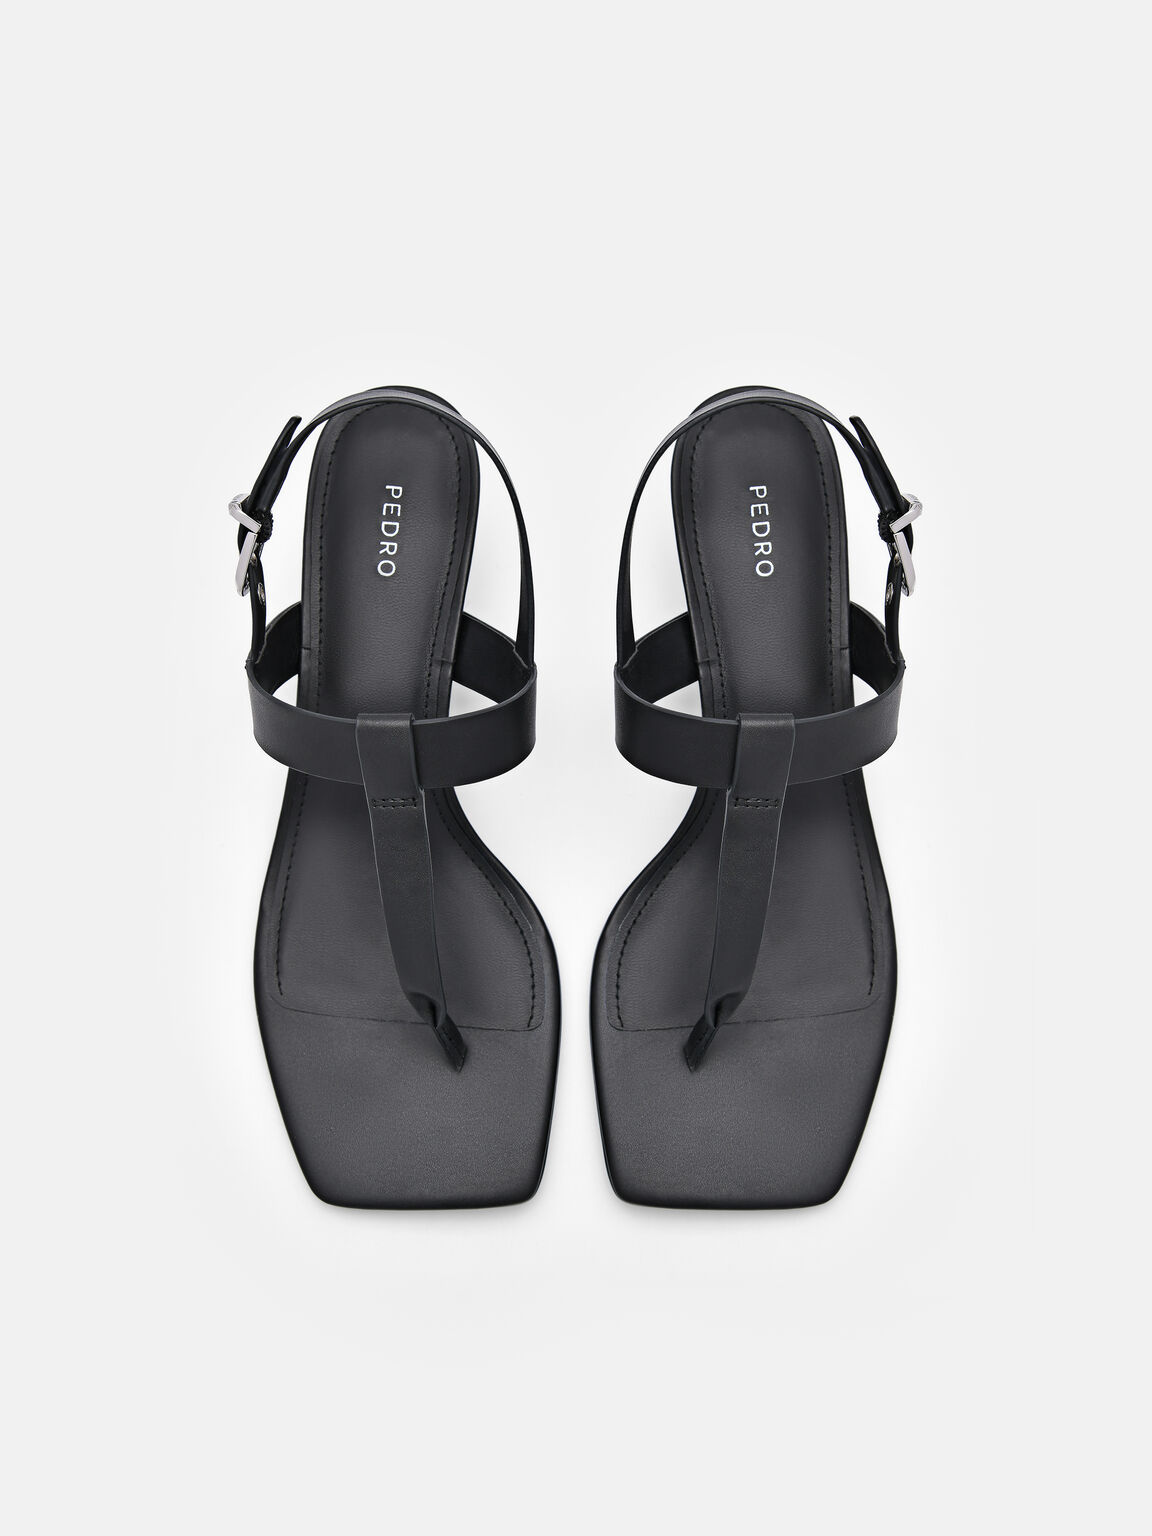 Black Helix Heel Sandals - PEDRO SG